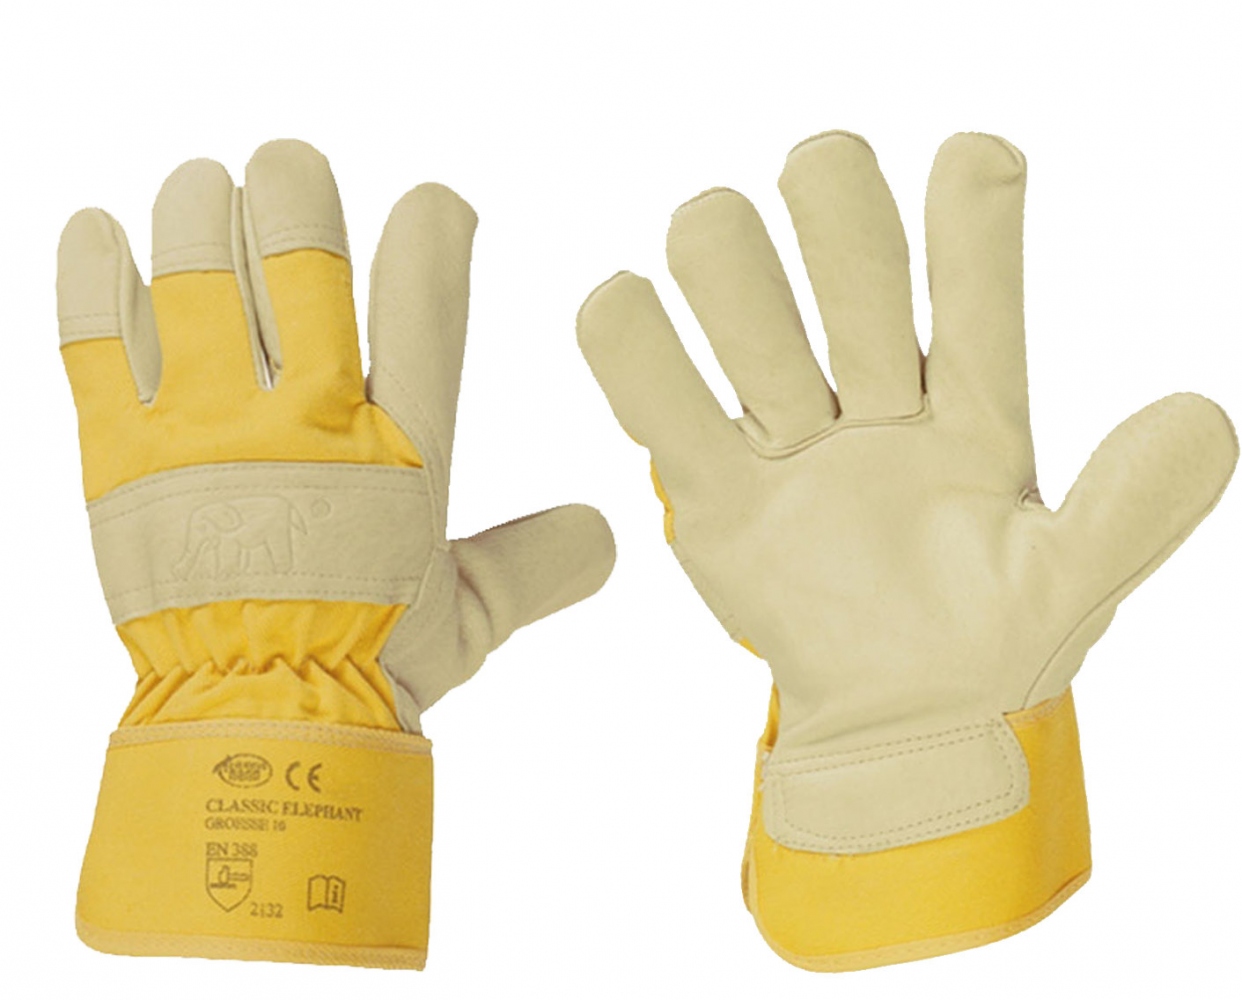 pics/Feldtmann 2016/Handschutz/google/stronghand-0179-elephant-leather-safety-gloves2.jpg